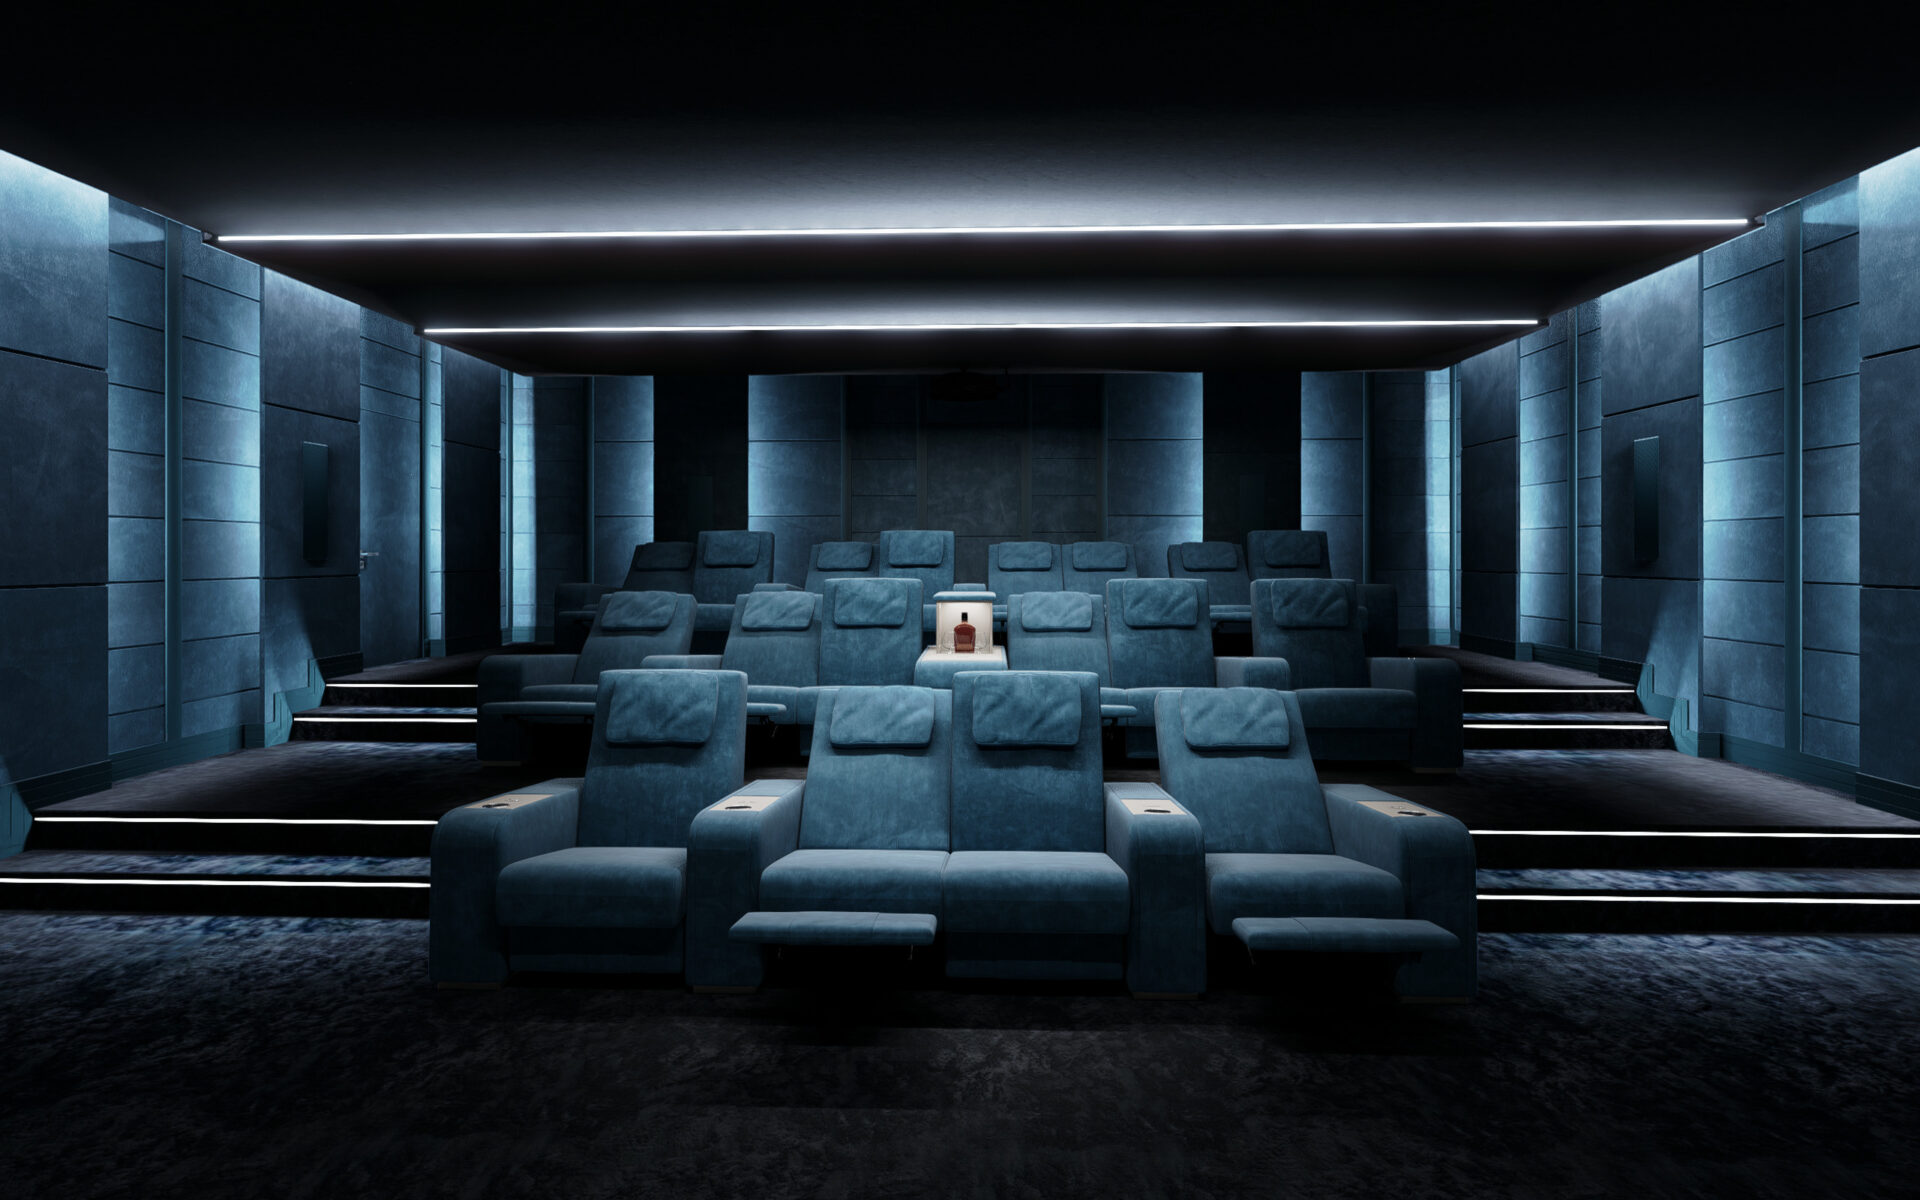 Turnkey Home Cinema - Designed & Realized by Vismara